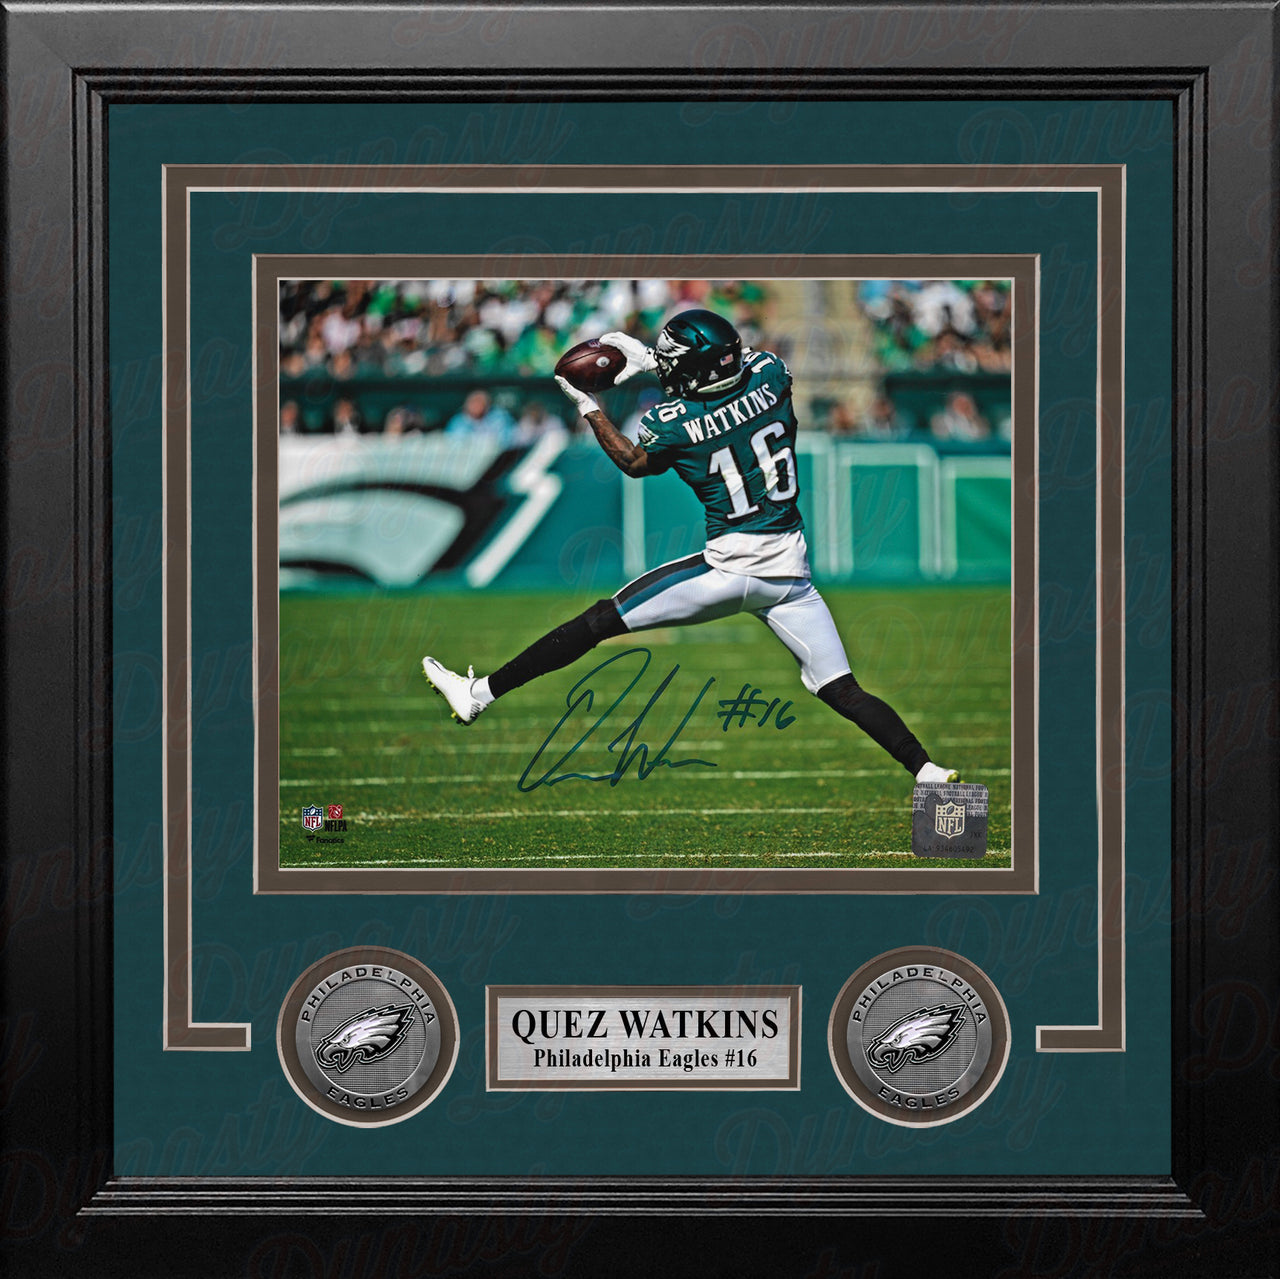 Quez Watkins Catch Philadelphia Eagles Autographed 8" x 10" Framed Football Photo